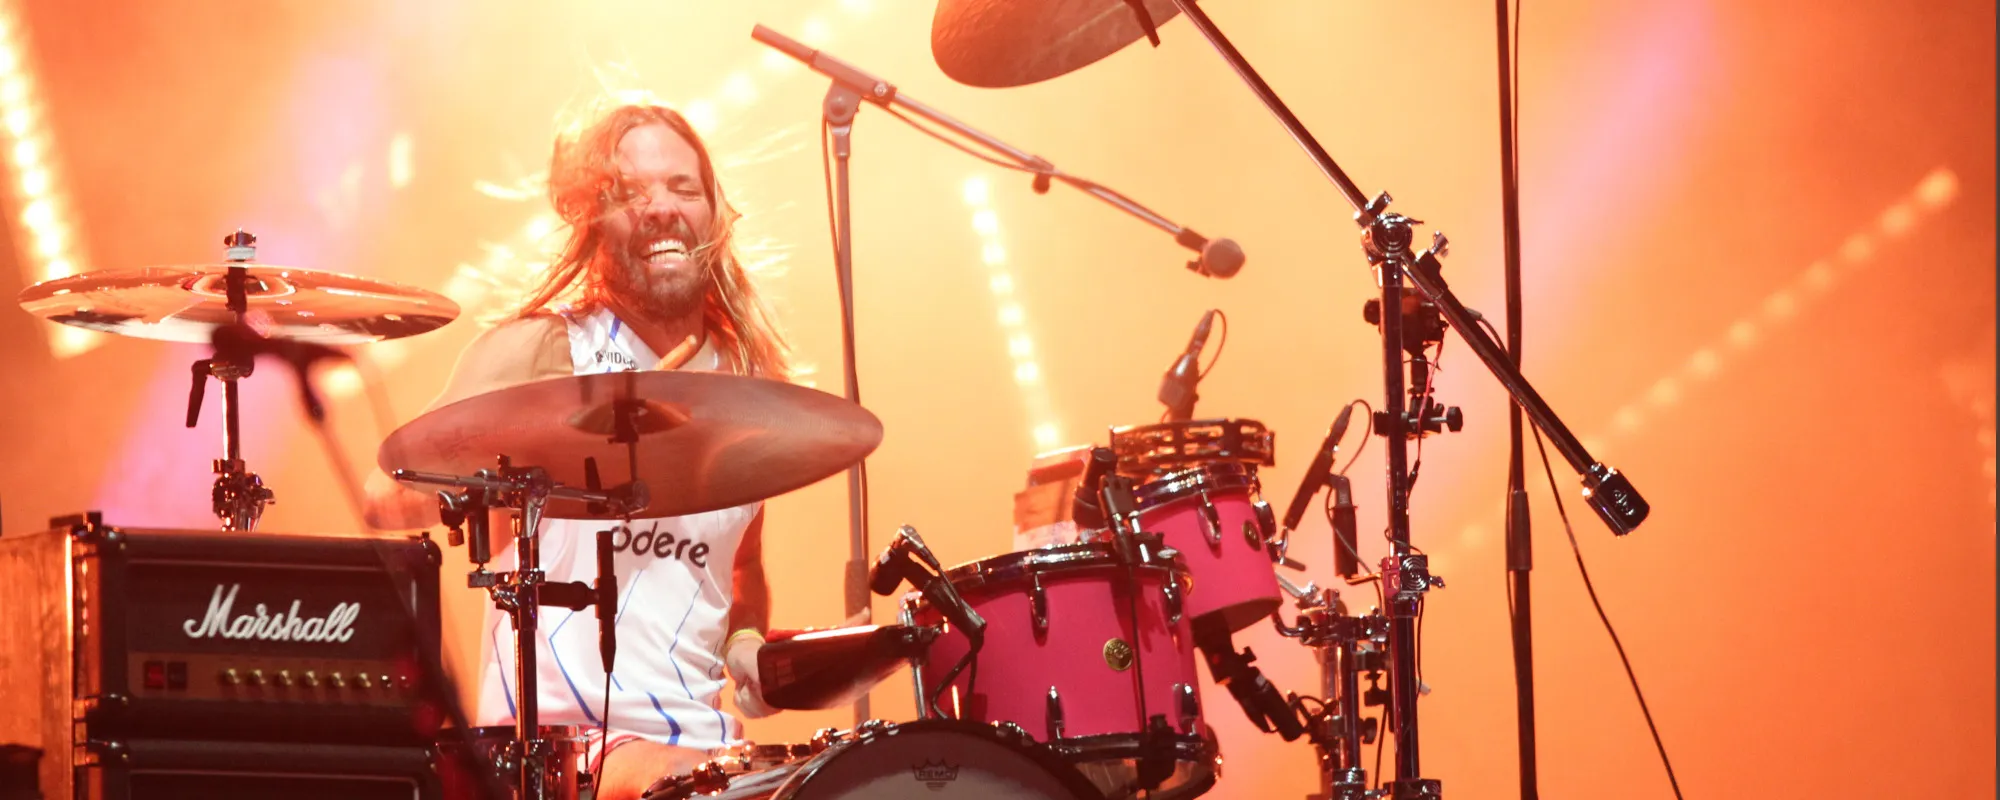 Foo Fighters Drummer, Taylor Hawkins, Dead at 50